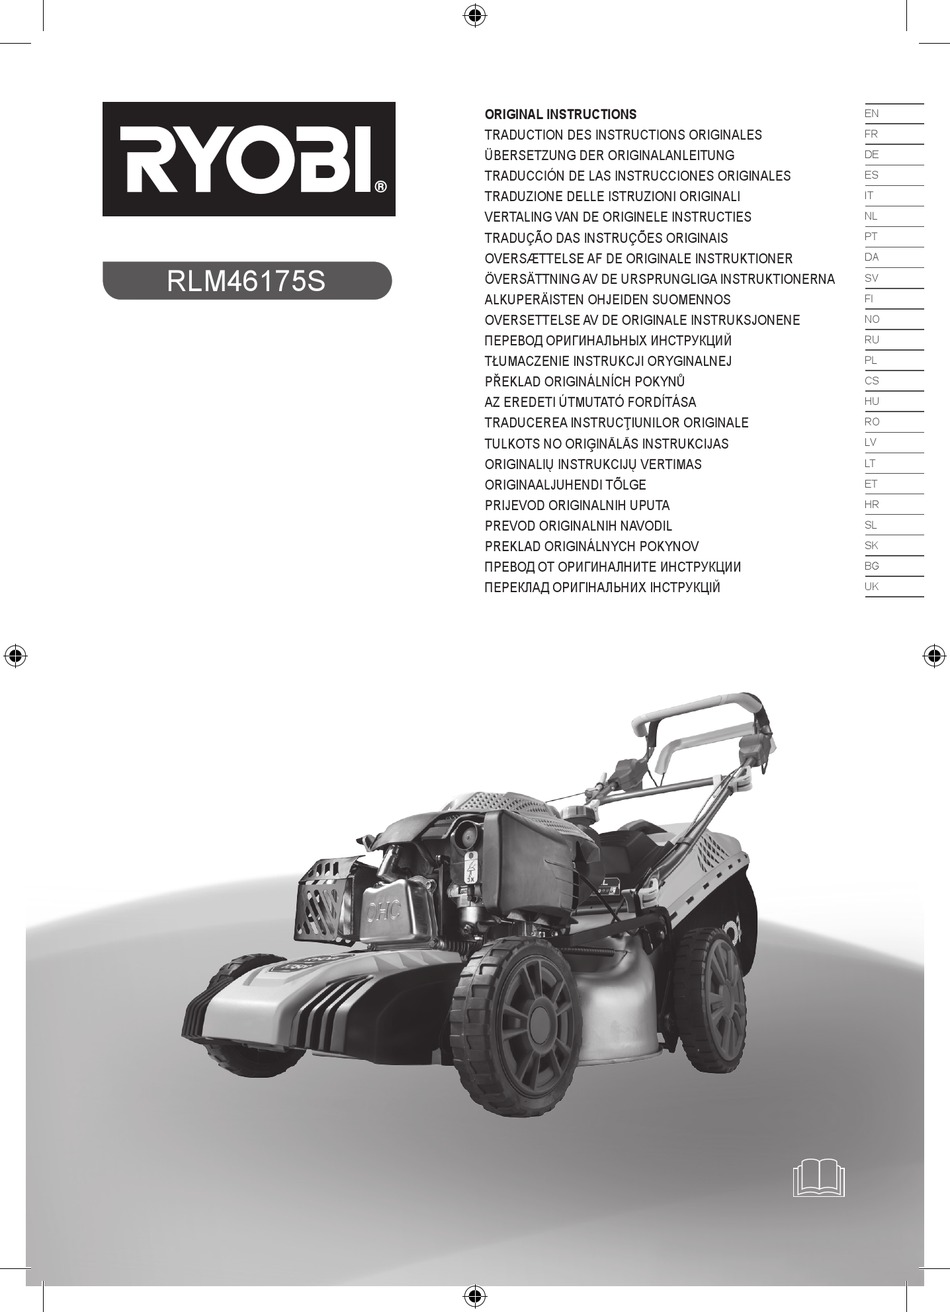 RYOBI RLM46175S ORIGINAL INSTRUCTIONS MANUAL Pdf Download | ManualsLib